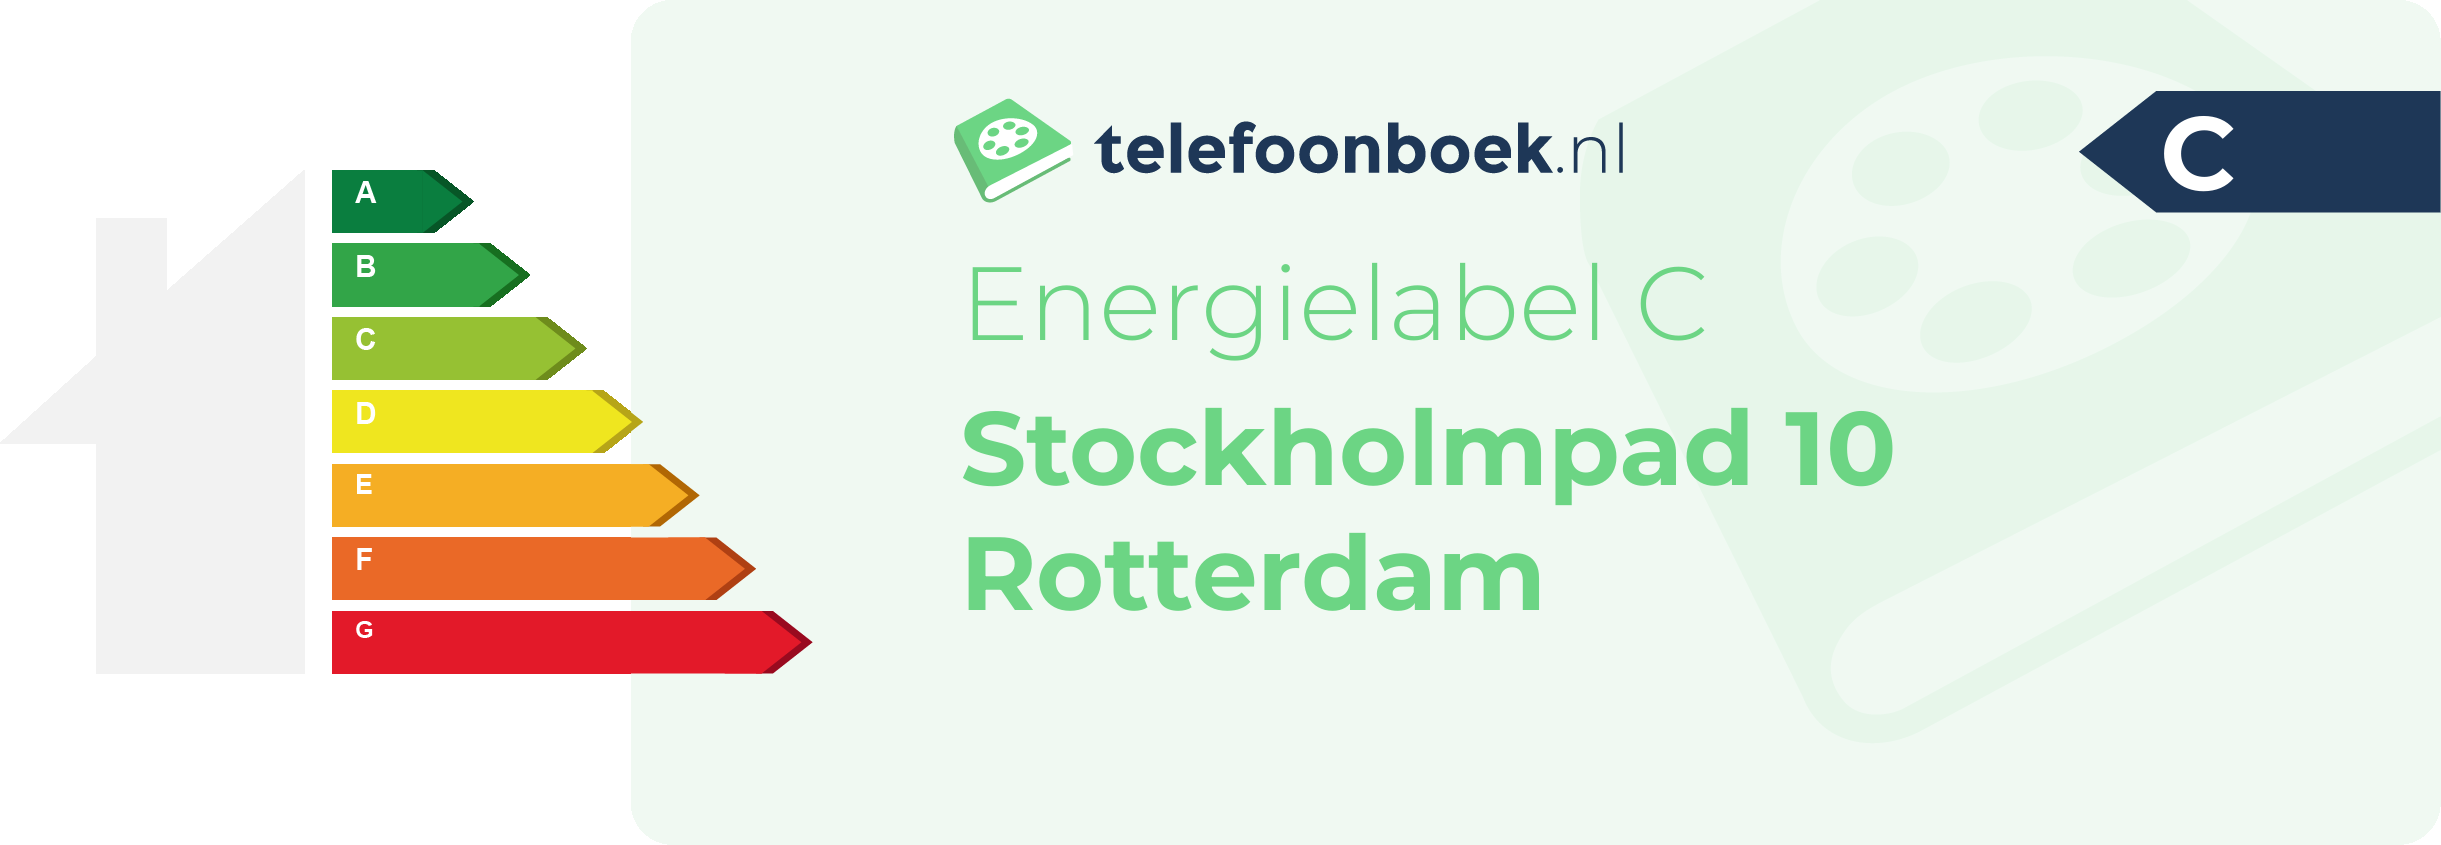 Energielabel Stockholmpad 10 Rotterdam